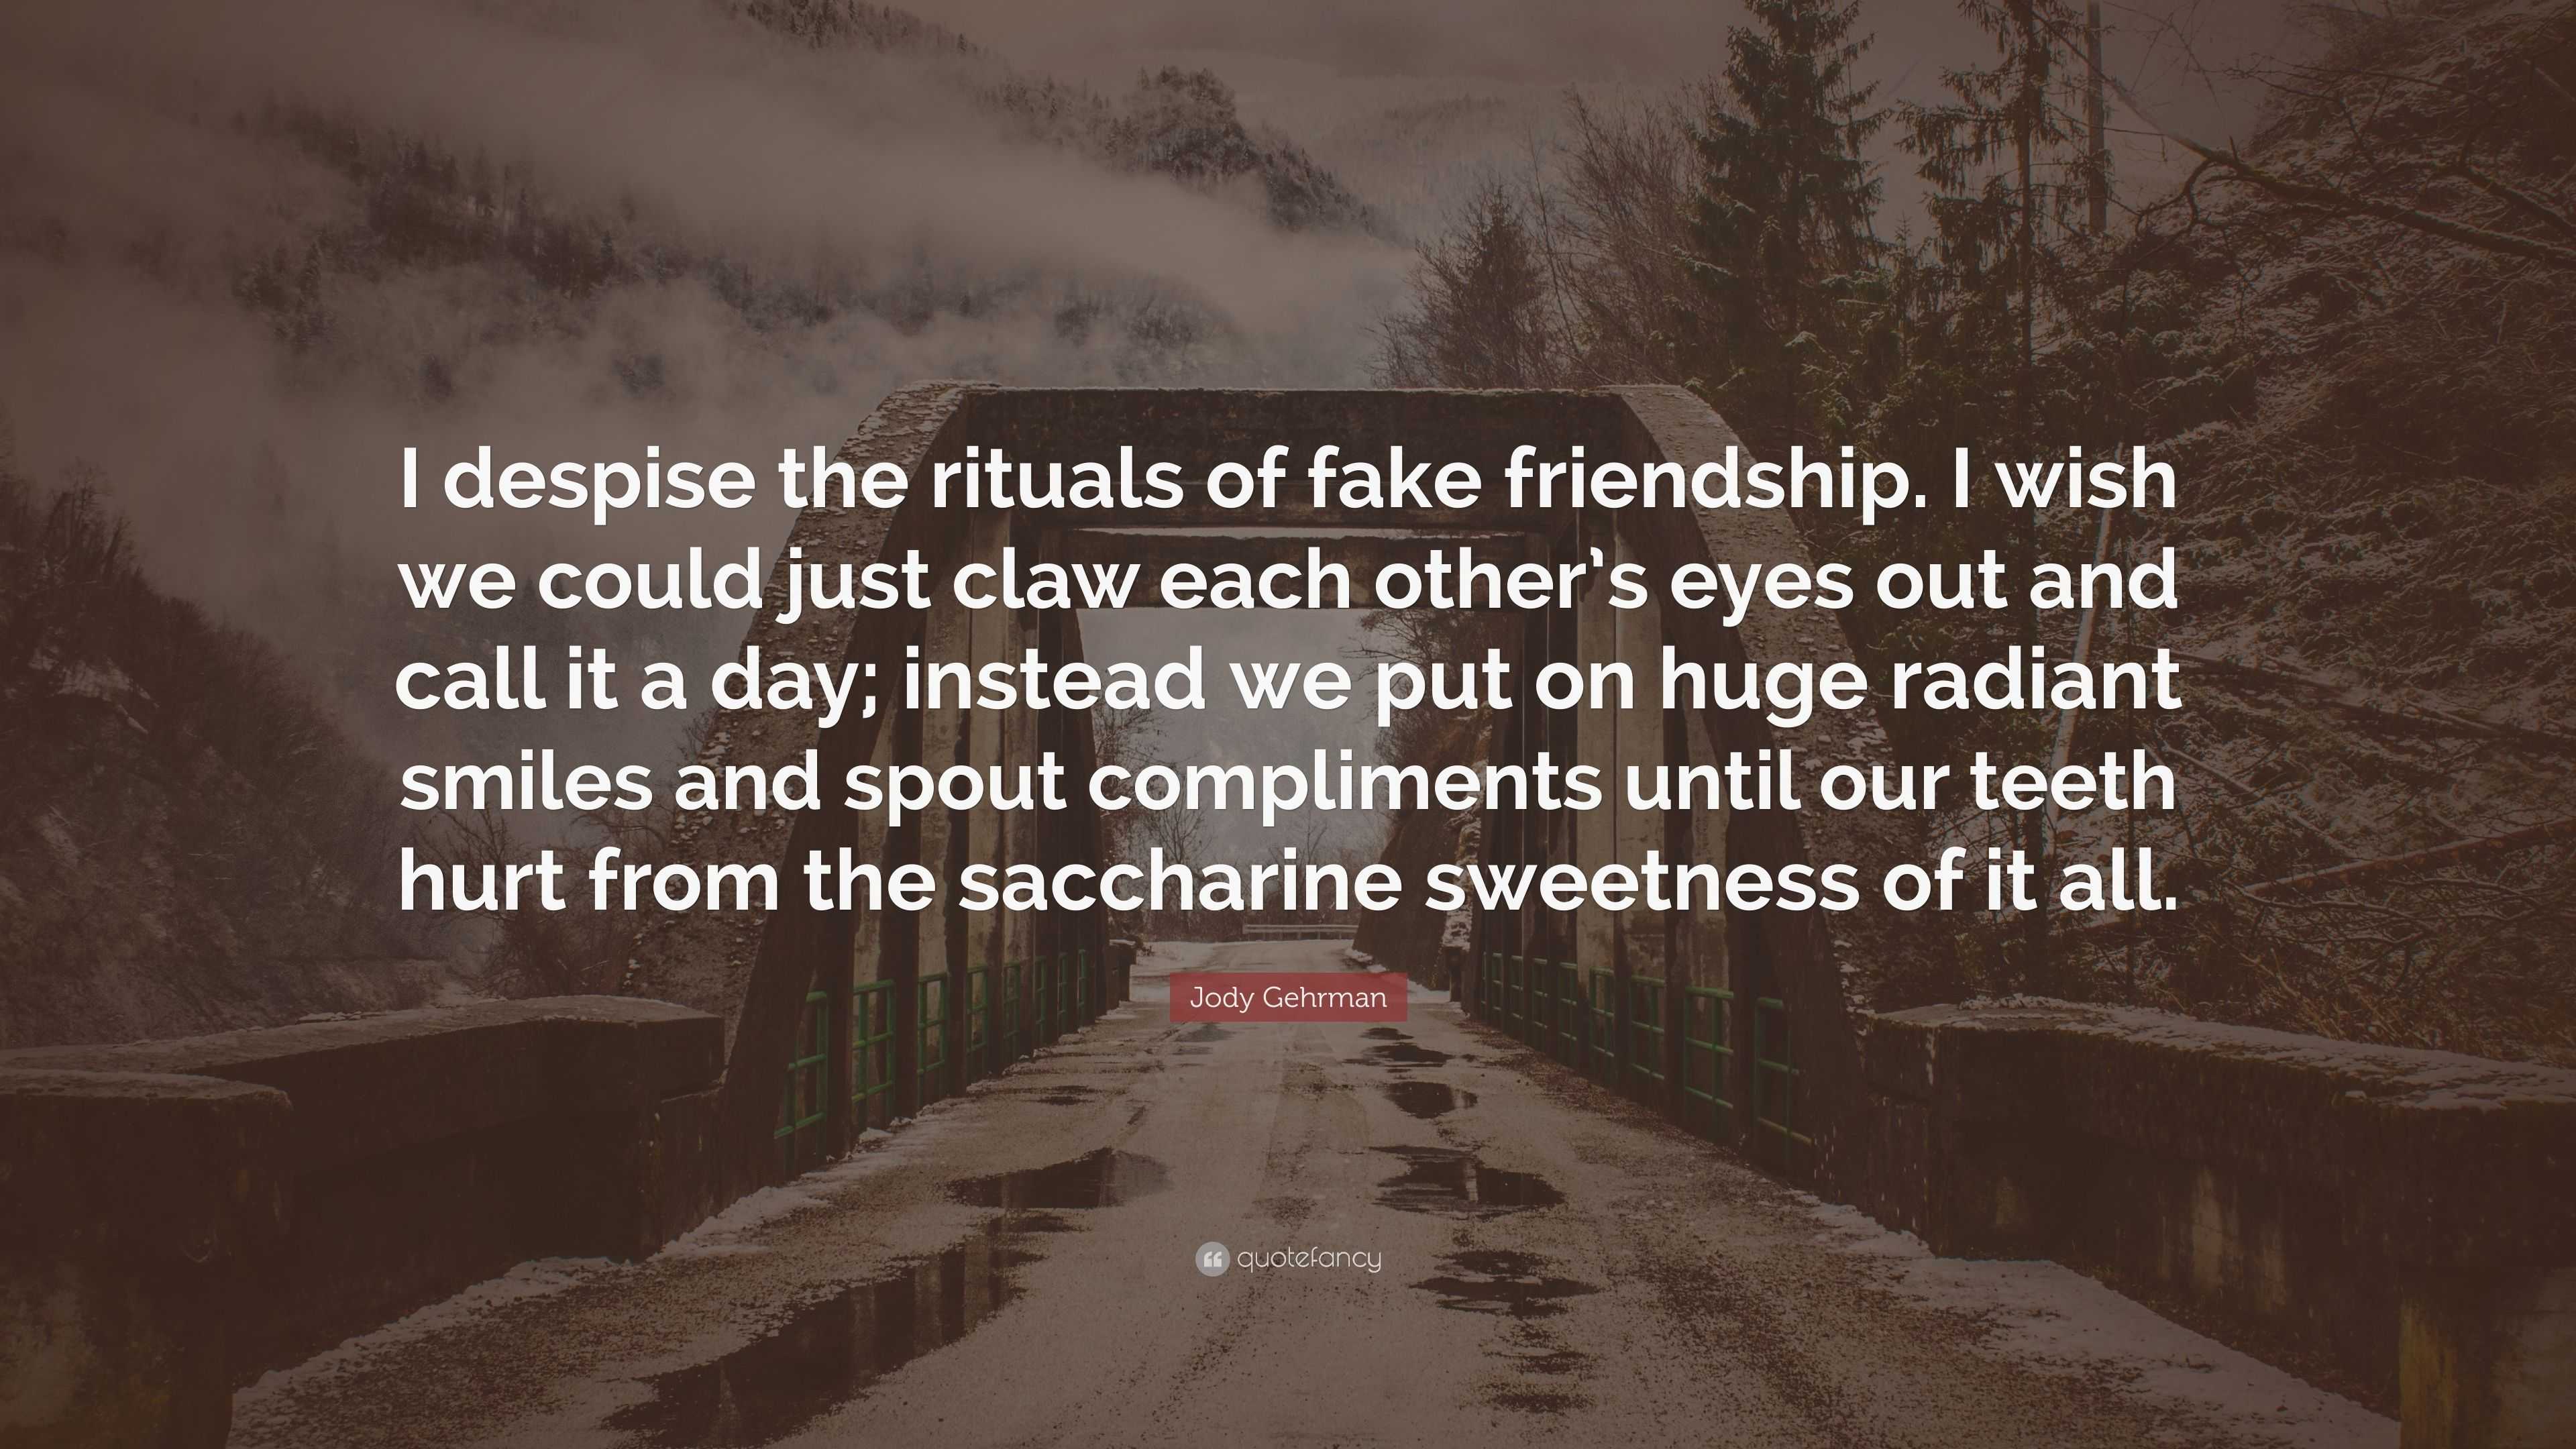 Jody Gehrman Quote: “I despise the rituals of fake friendship. I wish ...